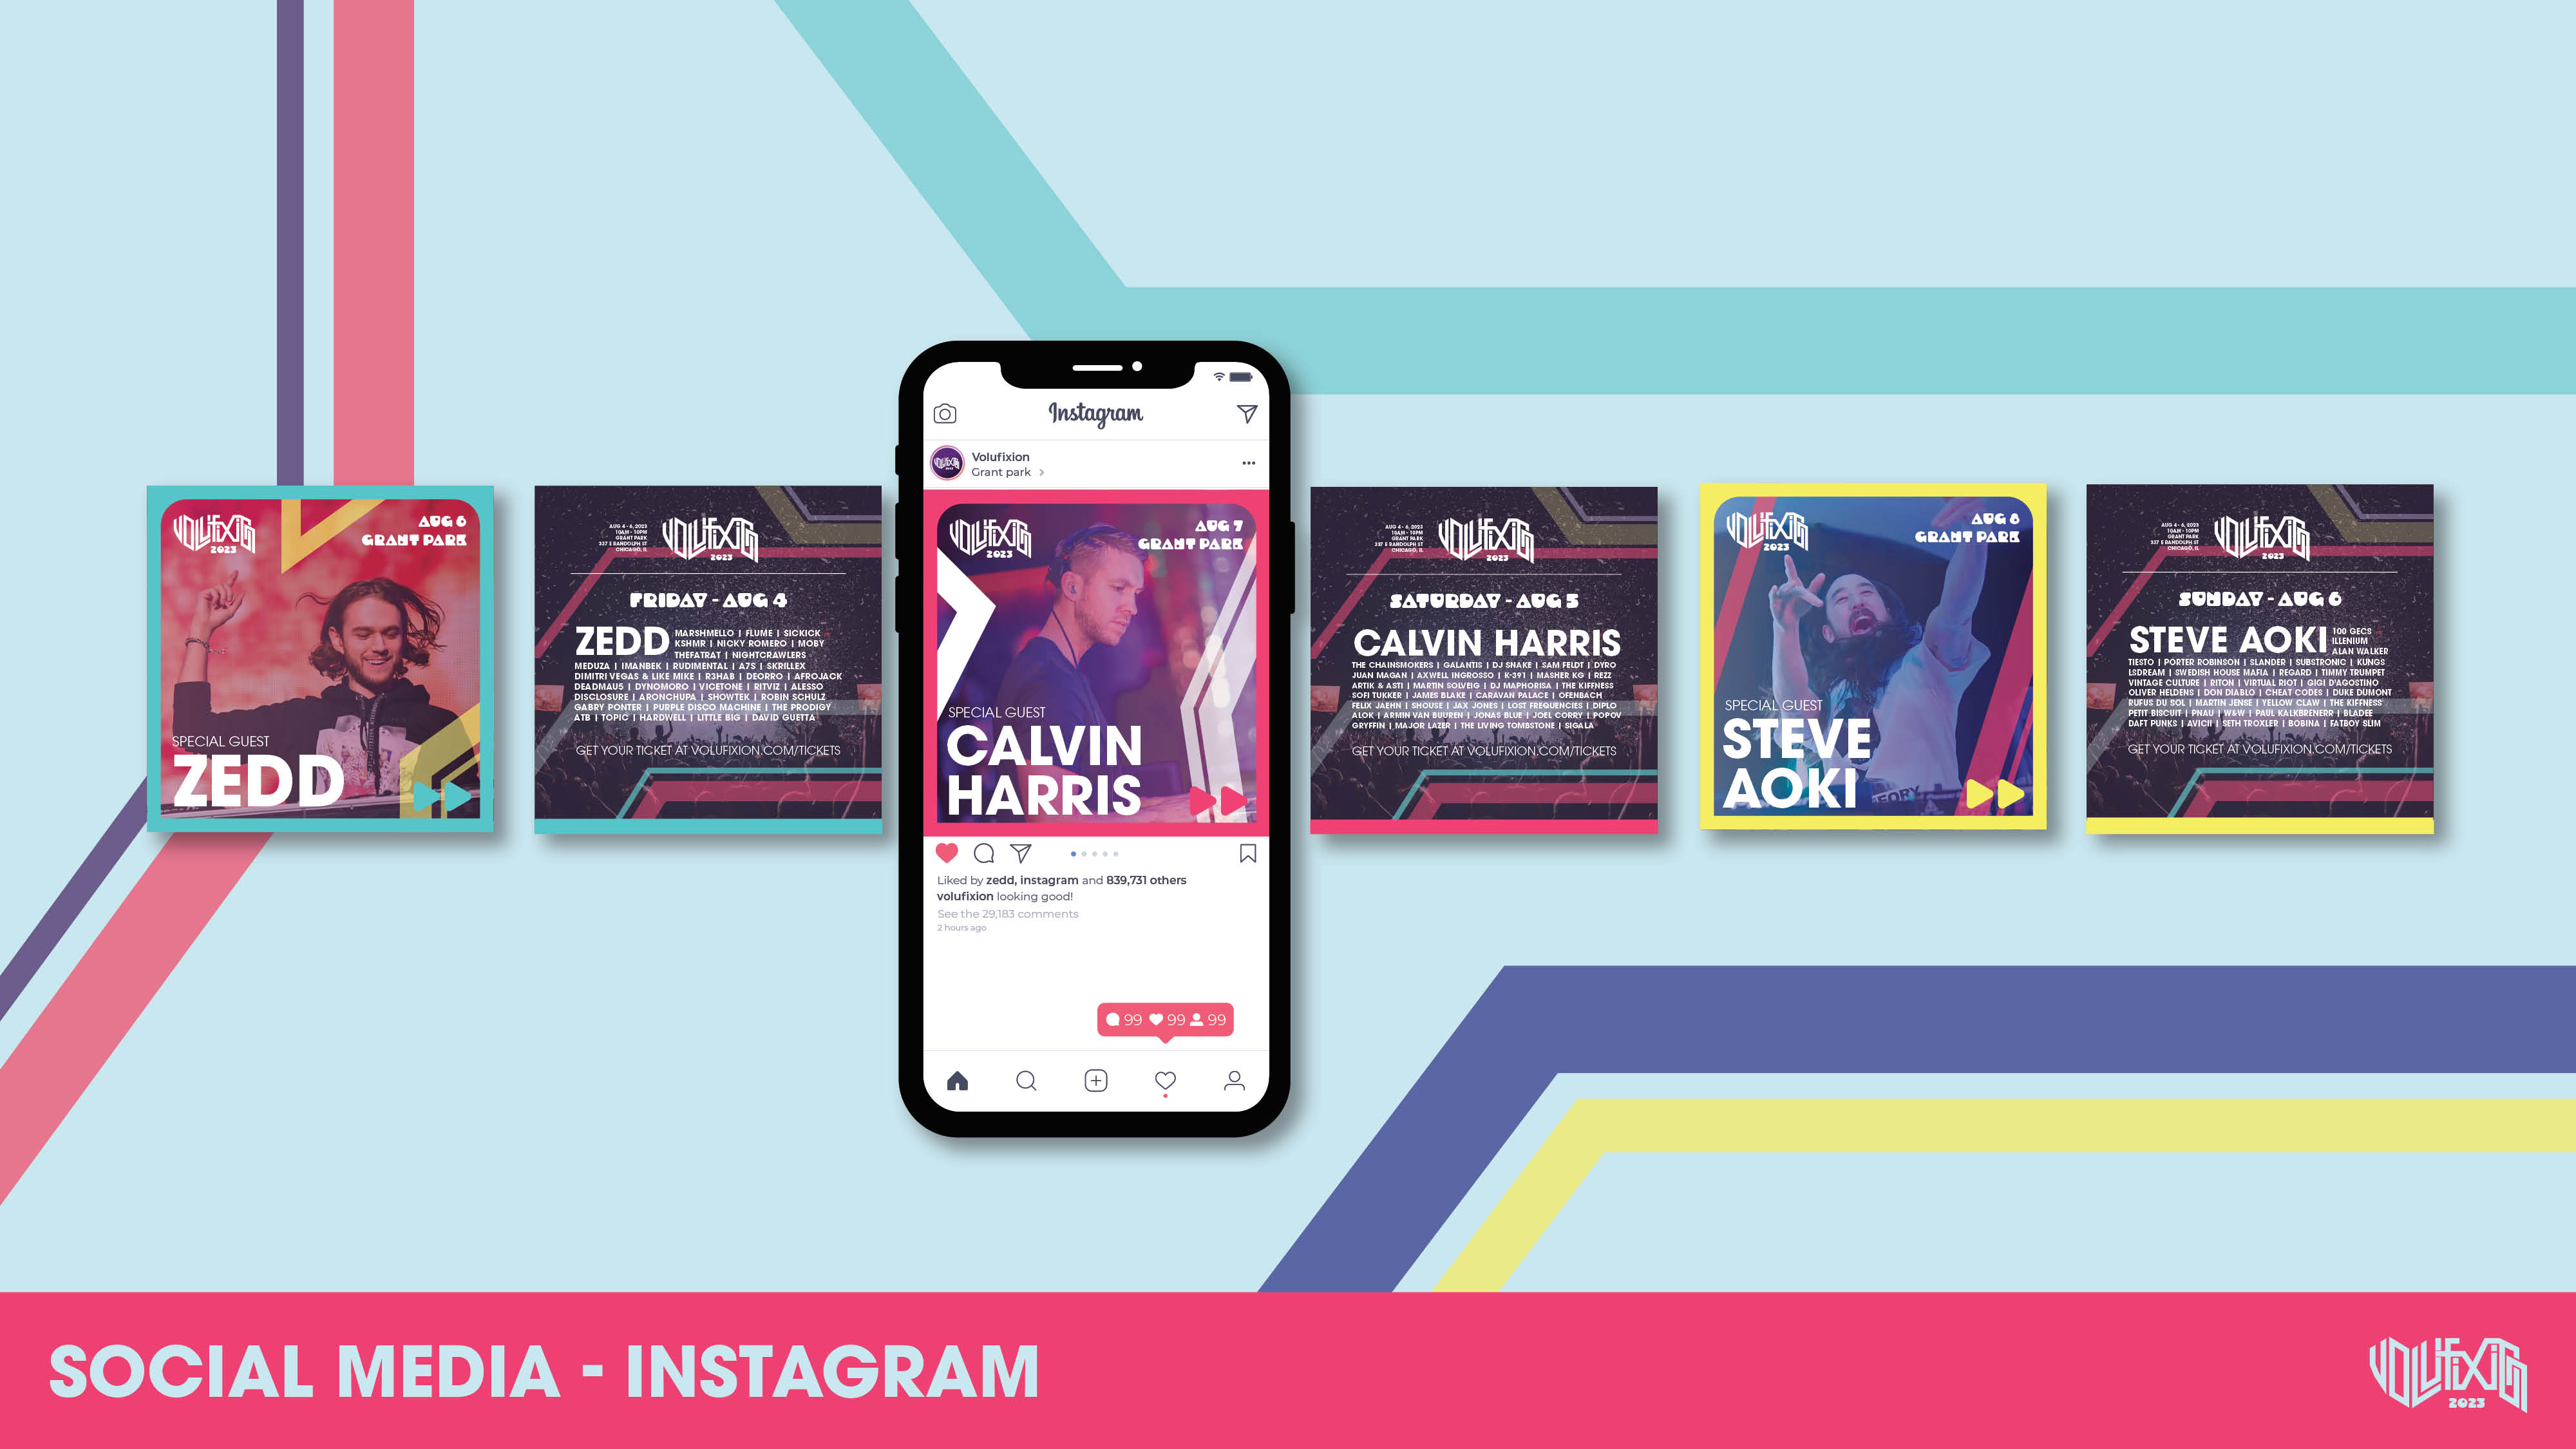 Volufixion mockup as Instagram posts, featuring Zedd, Calvin Harris, and Steve Aoki